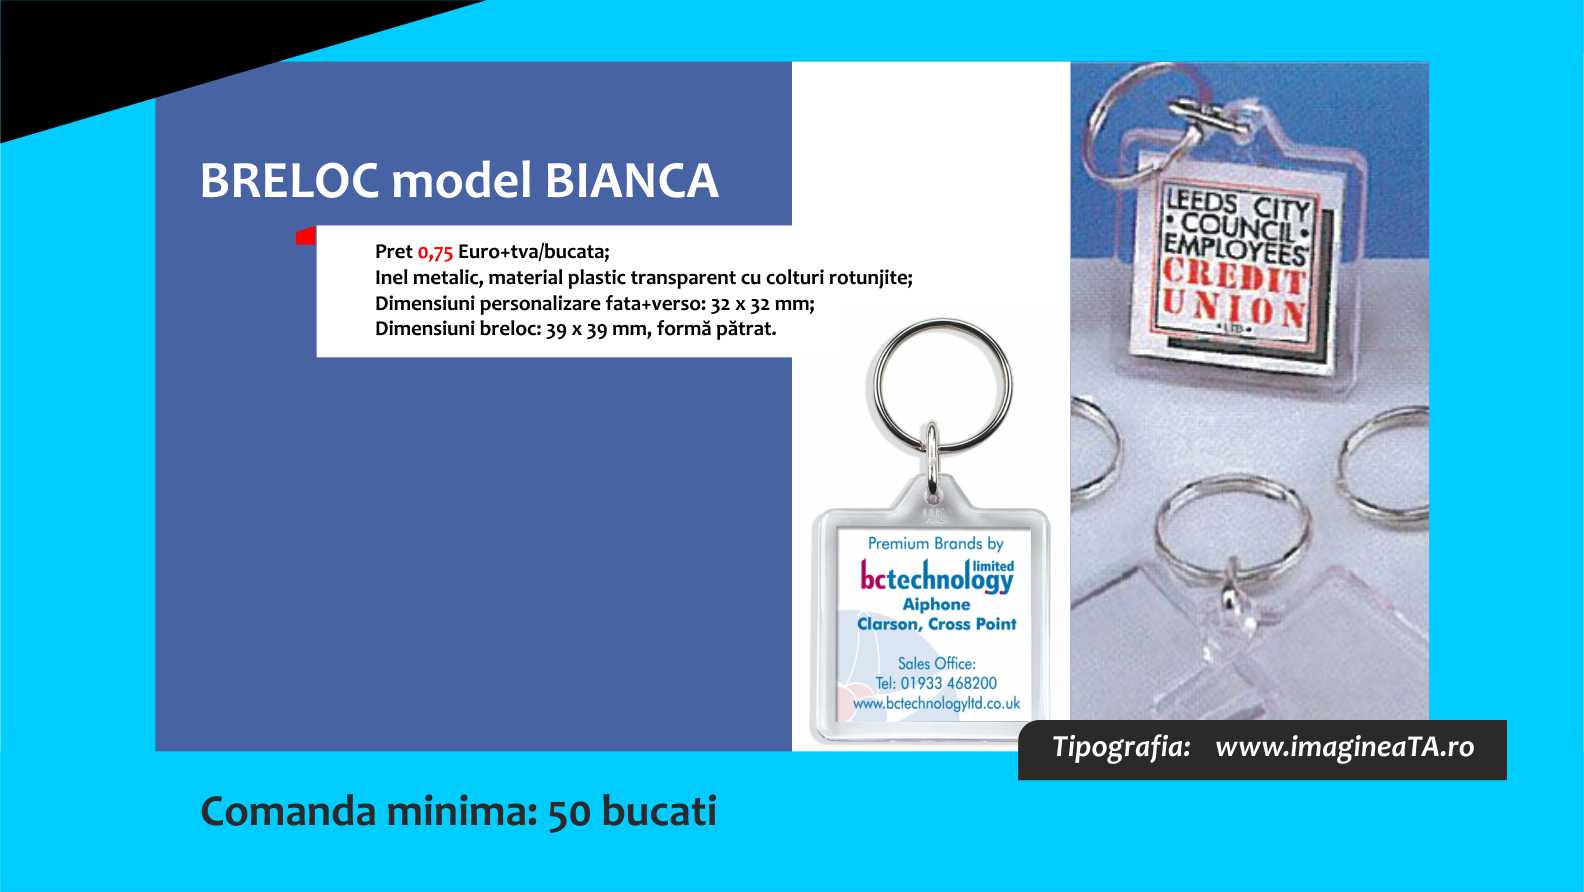 Breloc model BIANCA